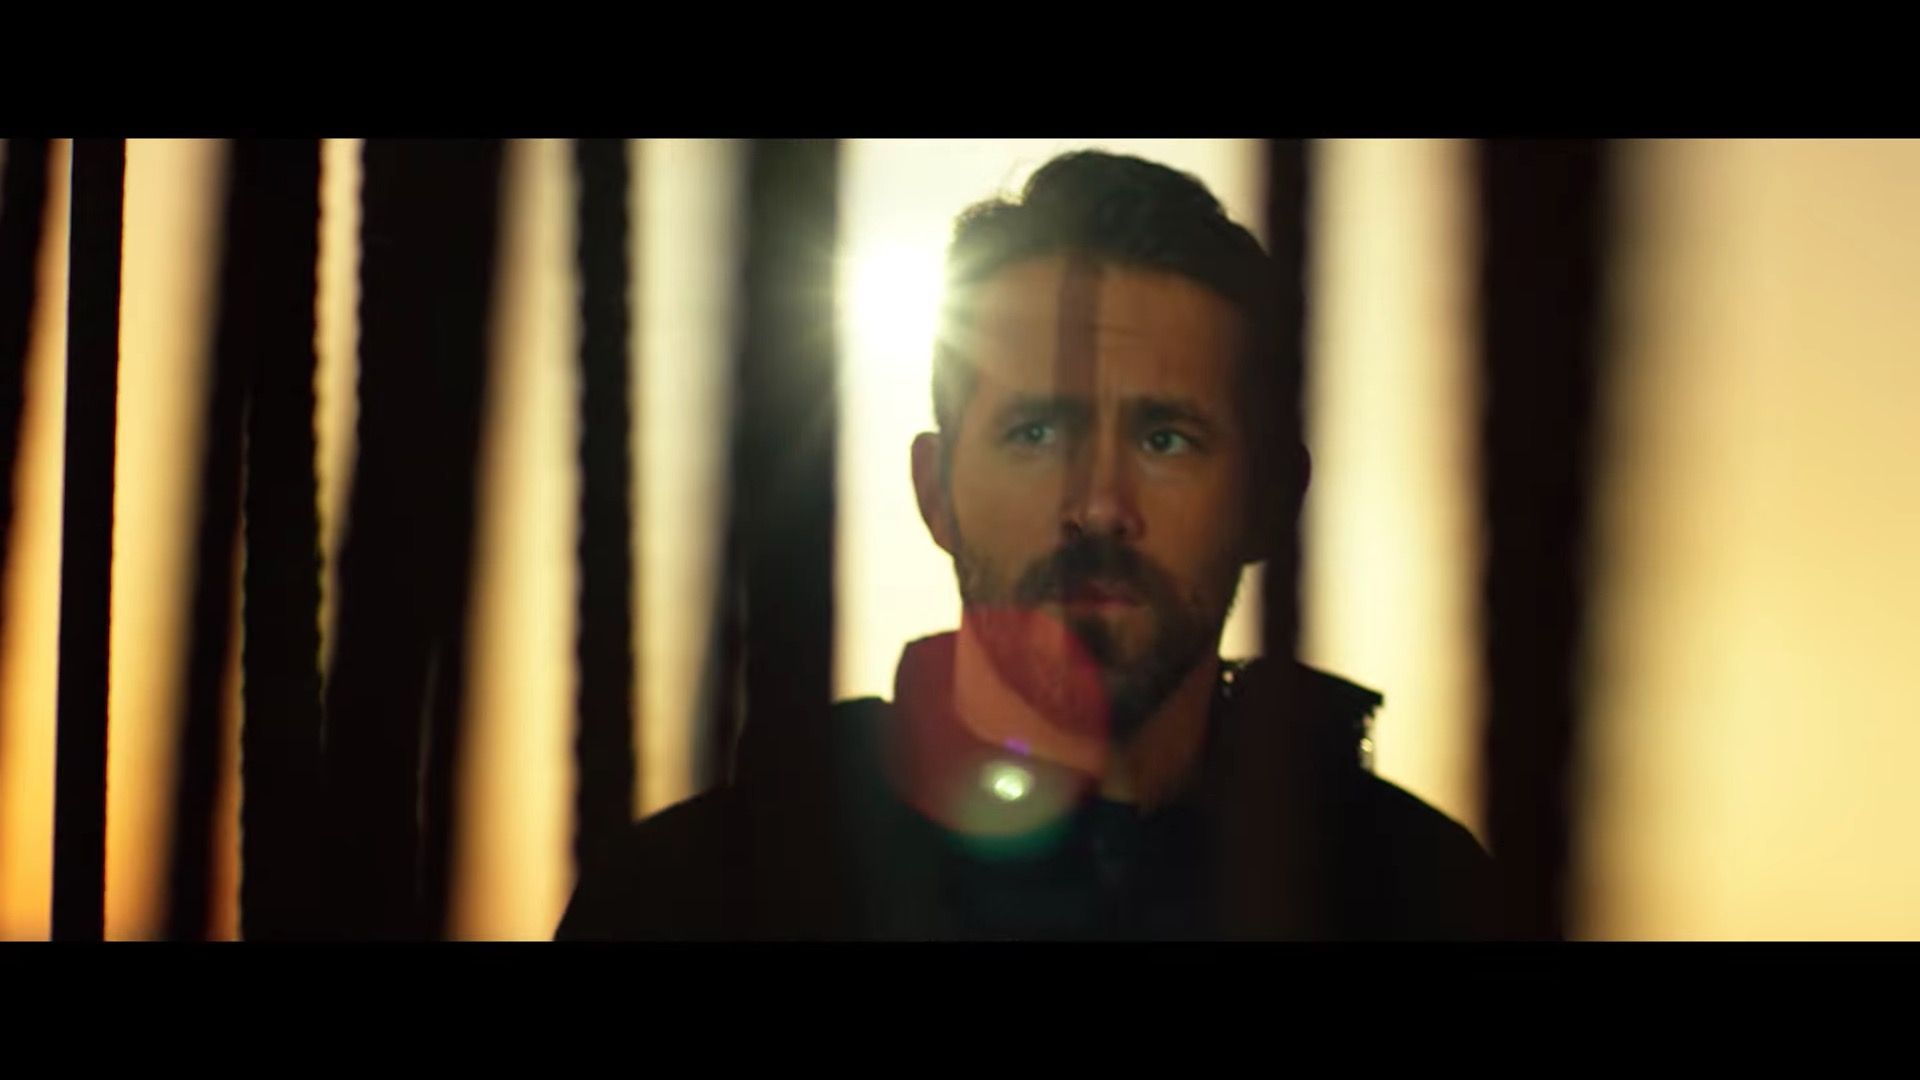 Ryan Reynolds Goes Full Action Hero In 6 Underground Trailer